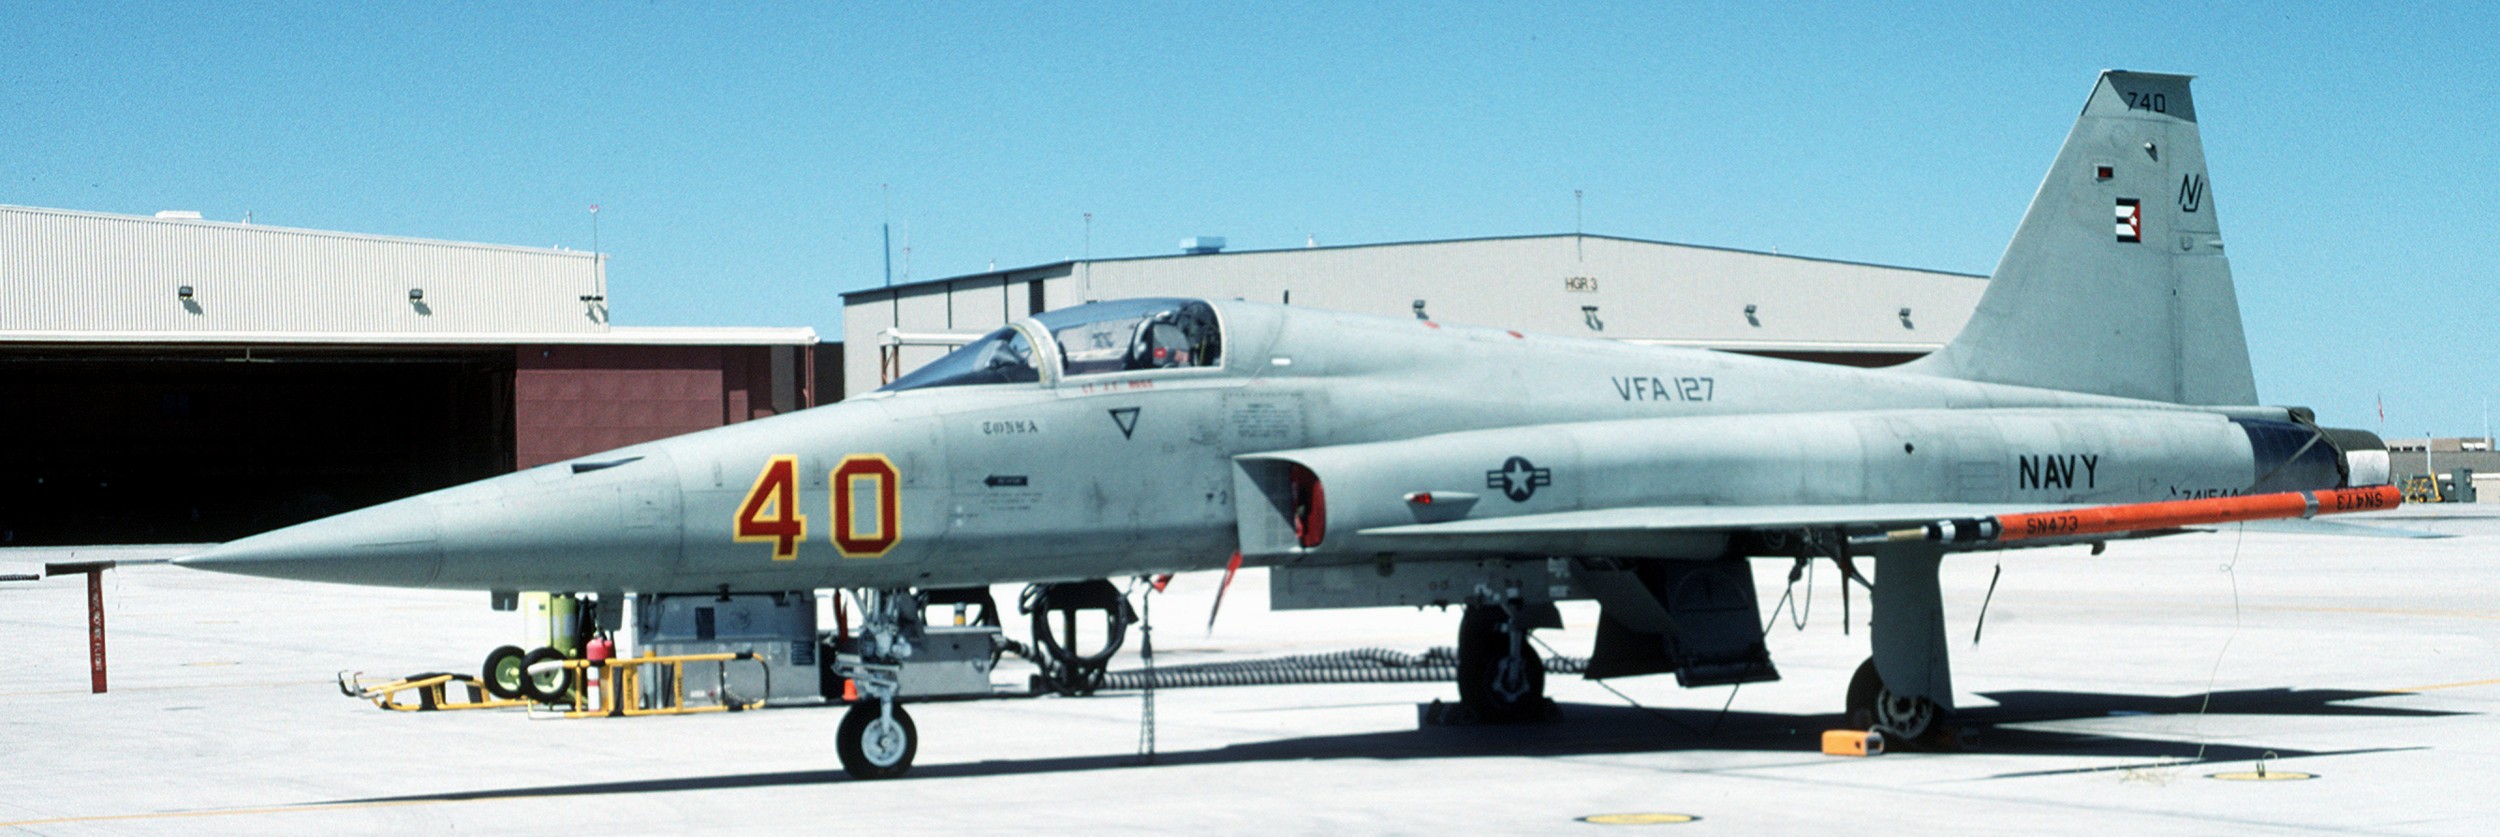 vfa-127 desert bogeys strike fighter squadron f-5e tiger 1993 26